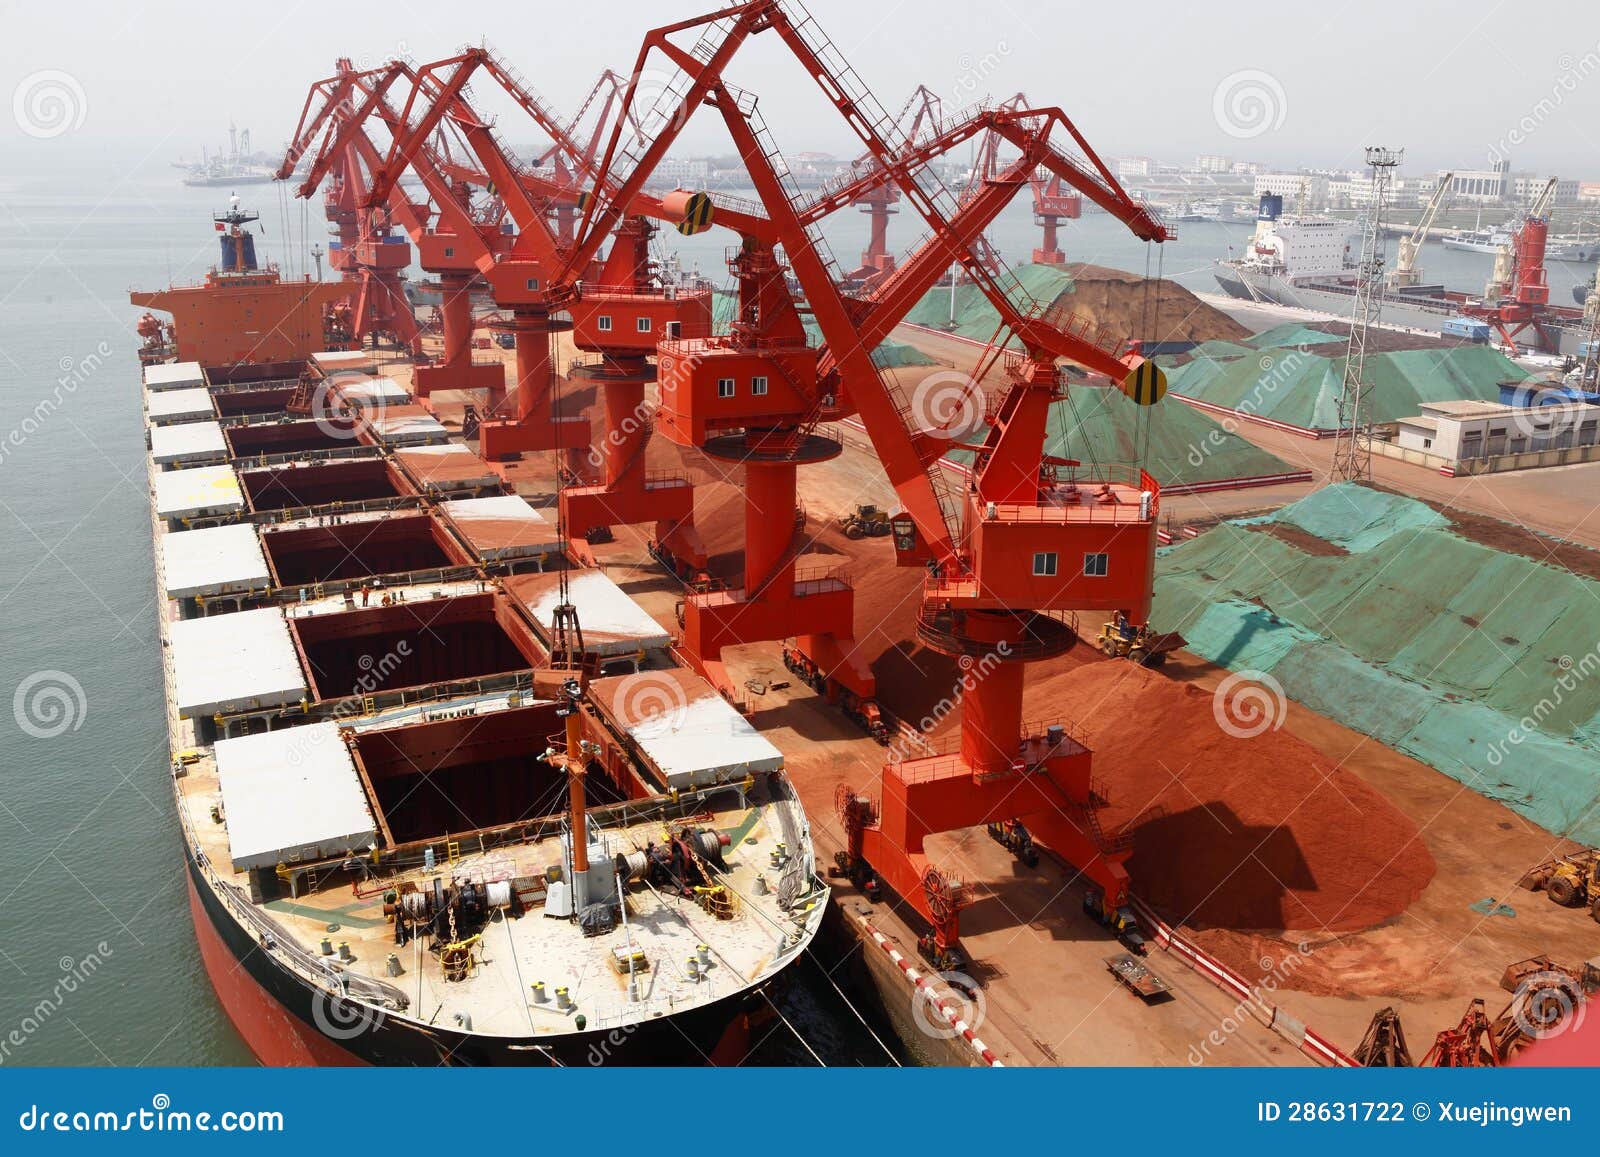 qingdao port iron ore terminal